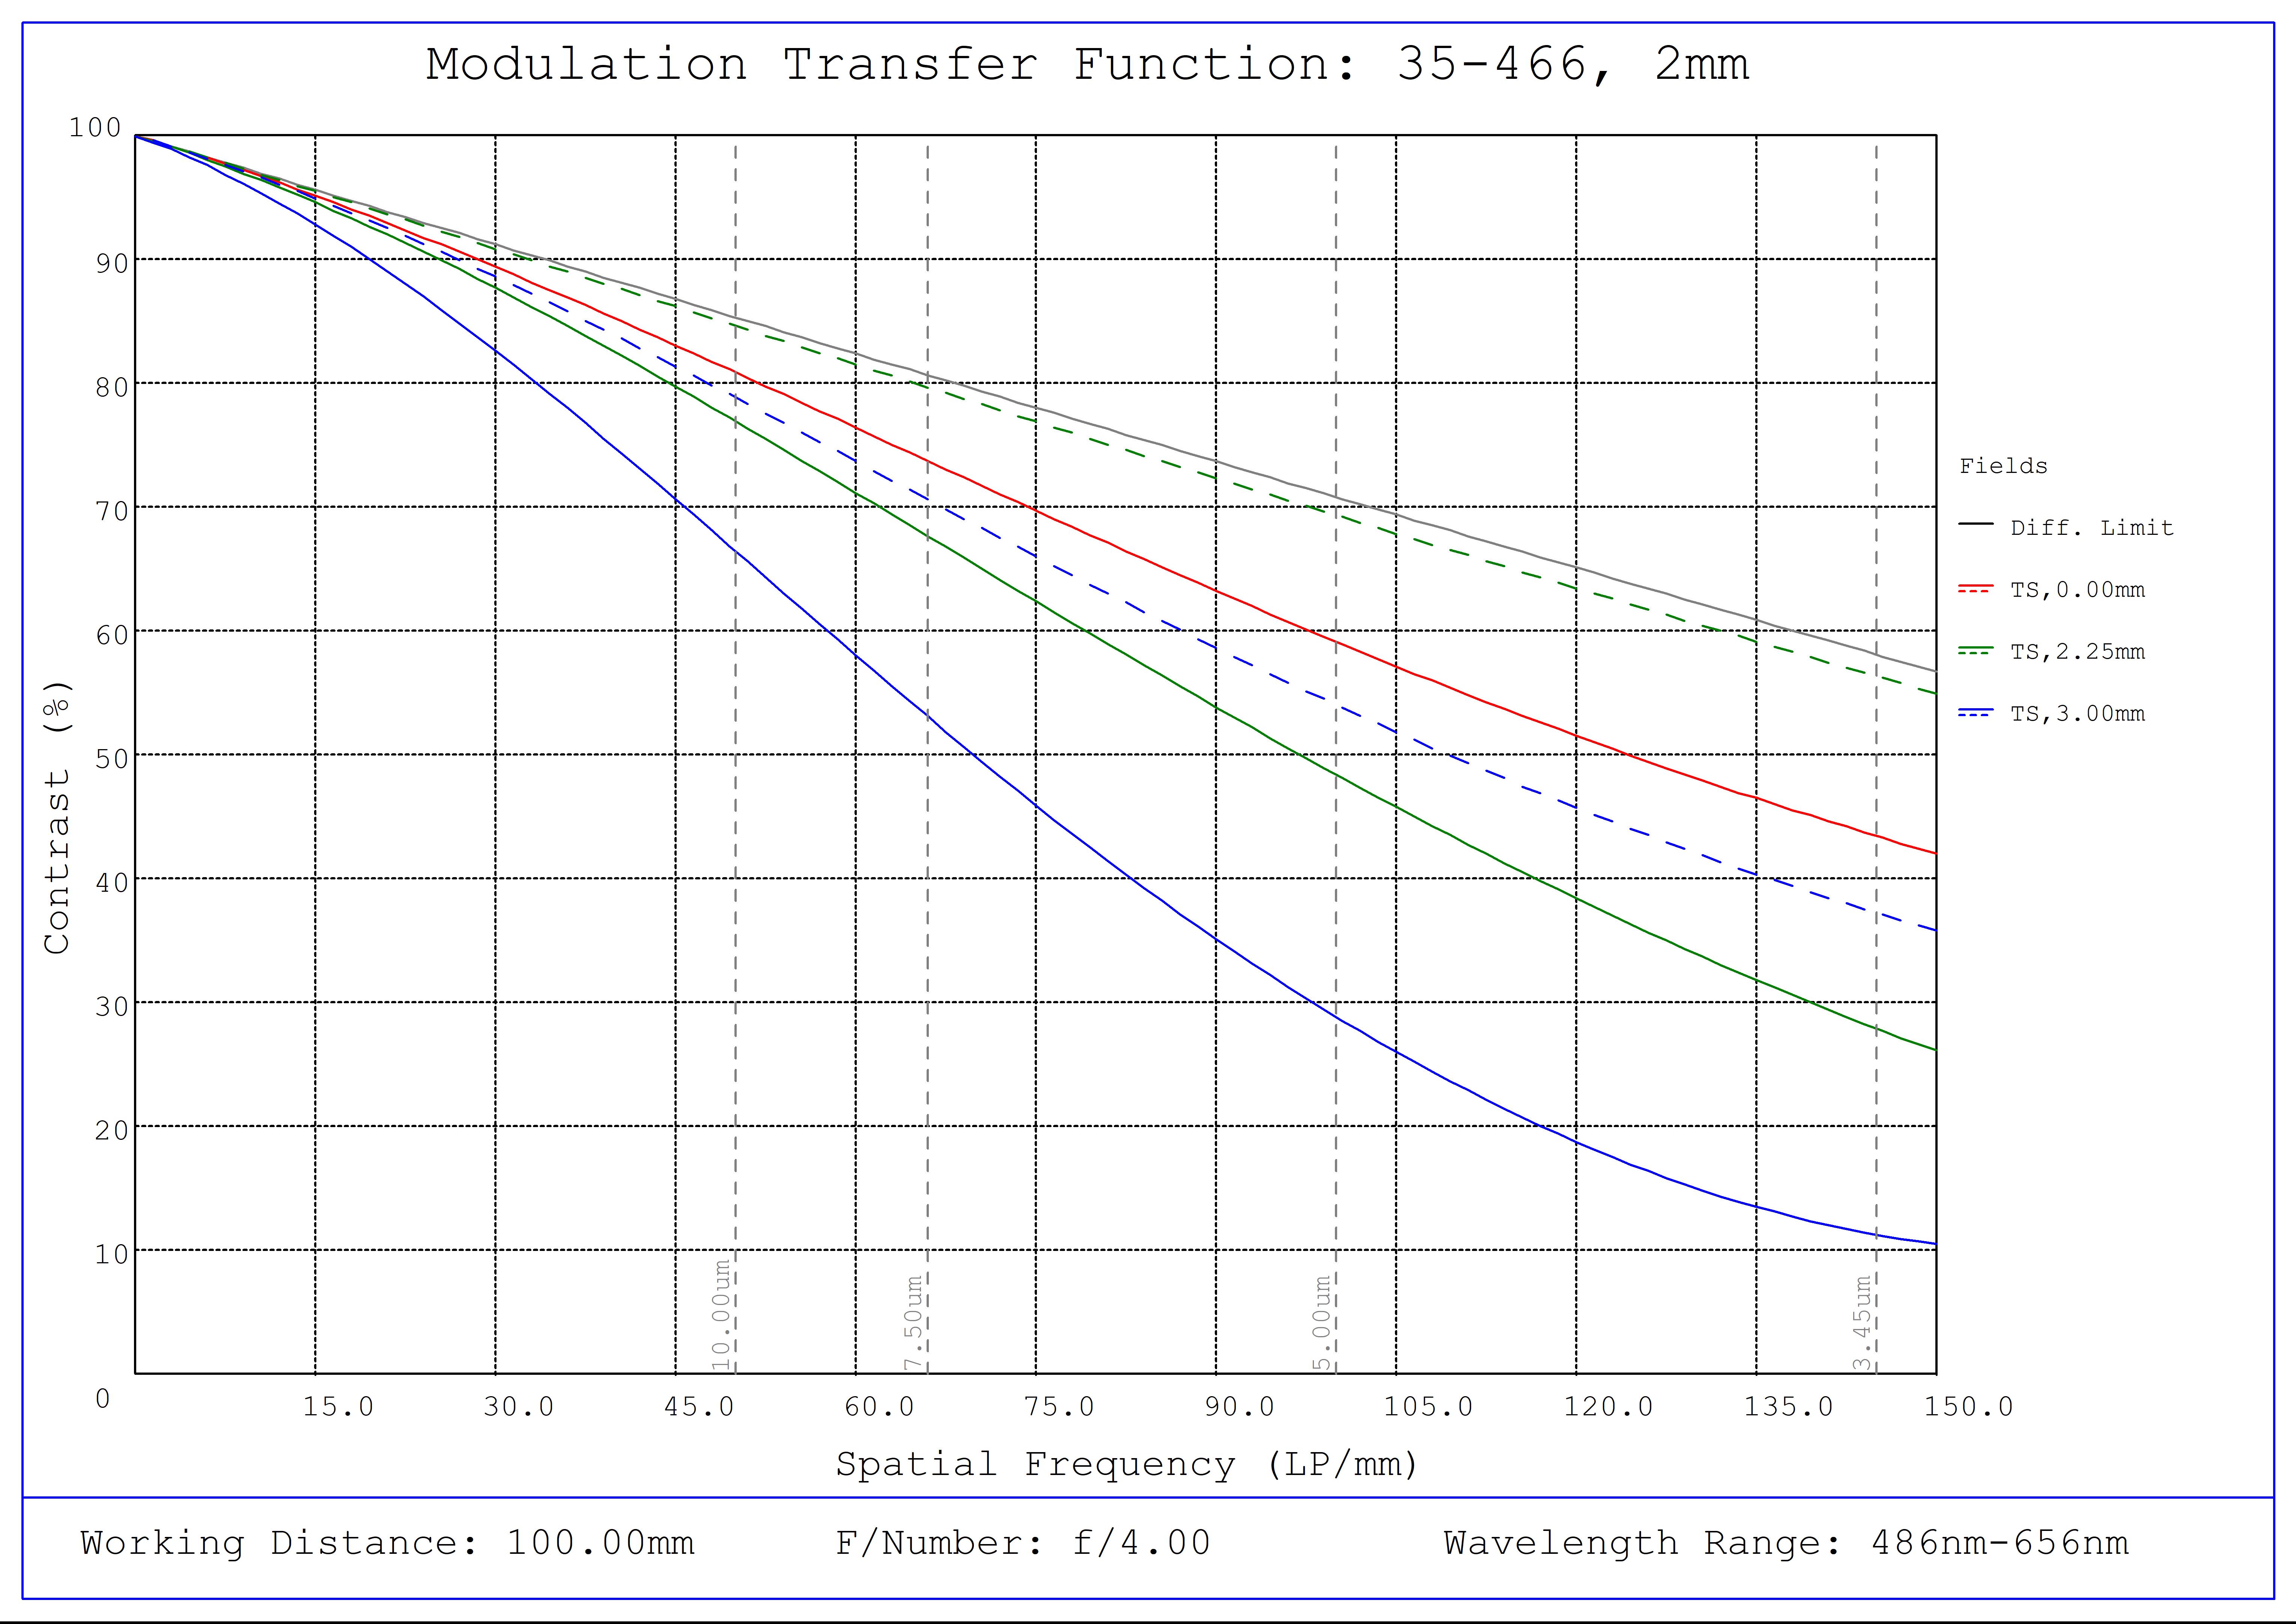 #35-466, 2mm FL f/4 IR-Cut, Blue Series M12 Lens, Modulated Transfer Function (MTF) Plot, 100mm Working Distance, f4